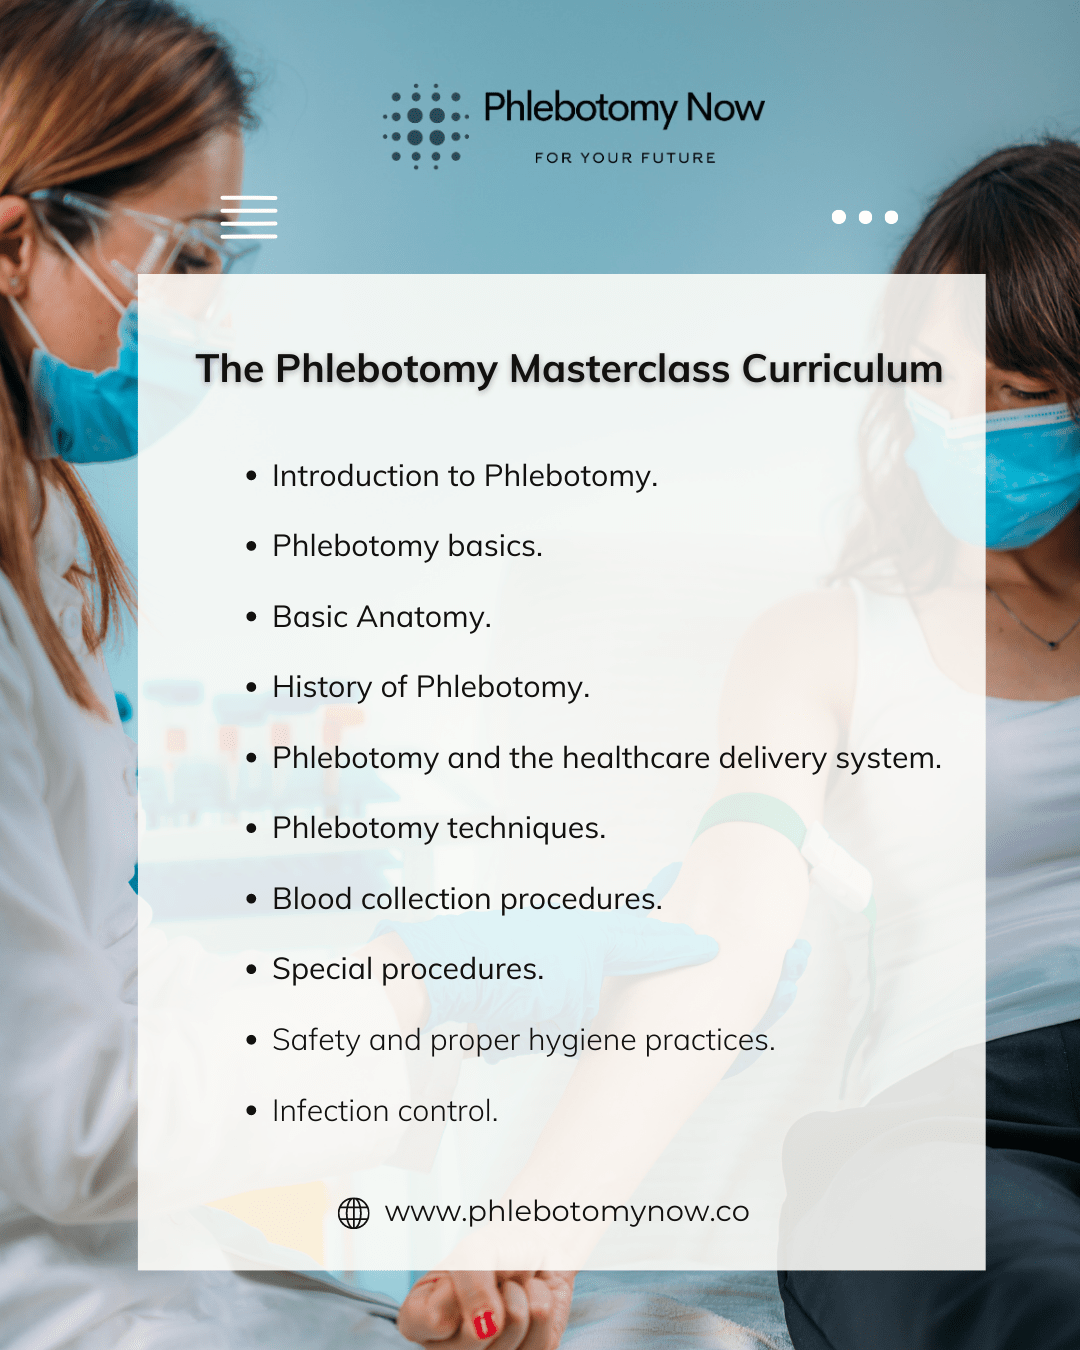 The Phlebotomy Masterclass Curriculum